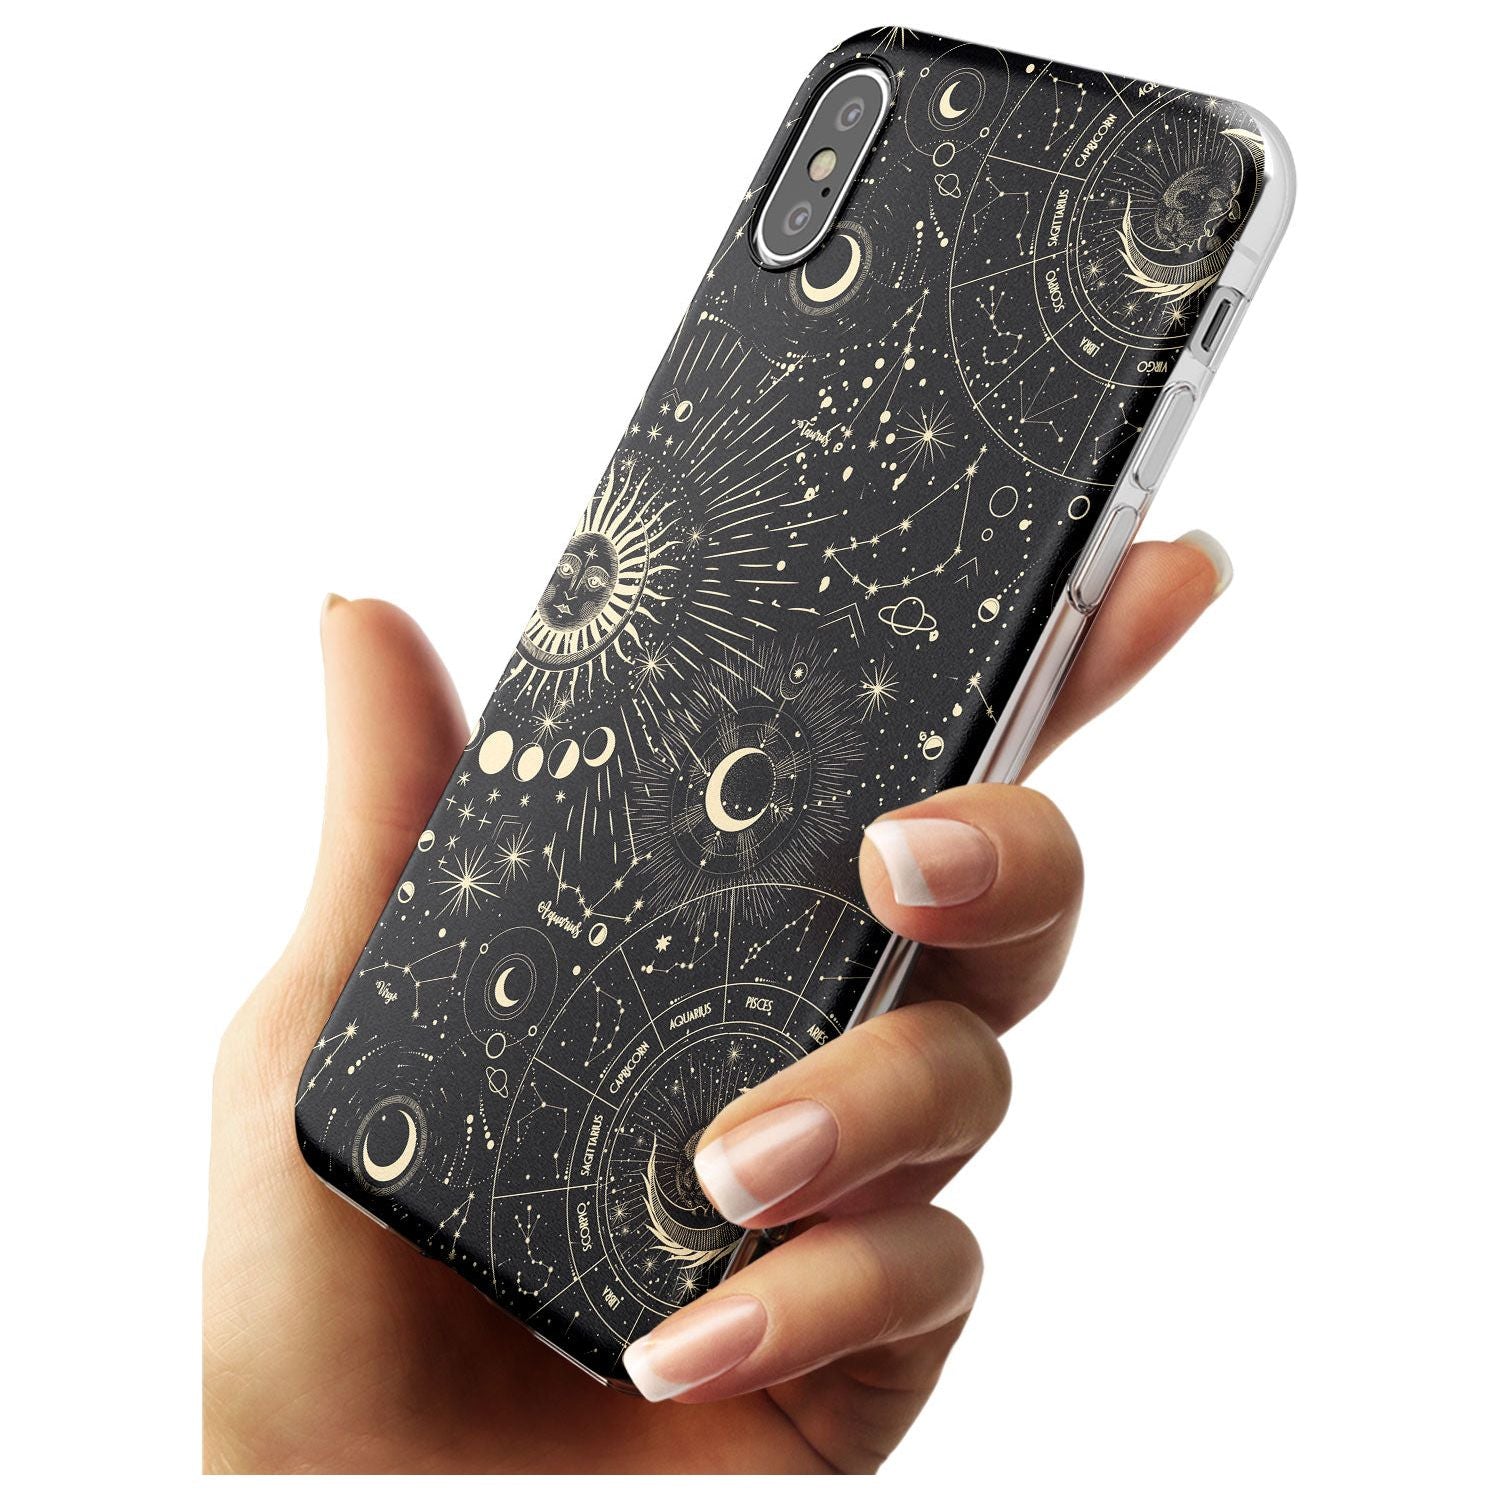 Suns & Zodiac Charts Black Impact Phone Case for iPhone X XS Max XR